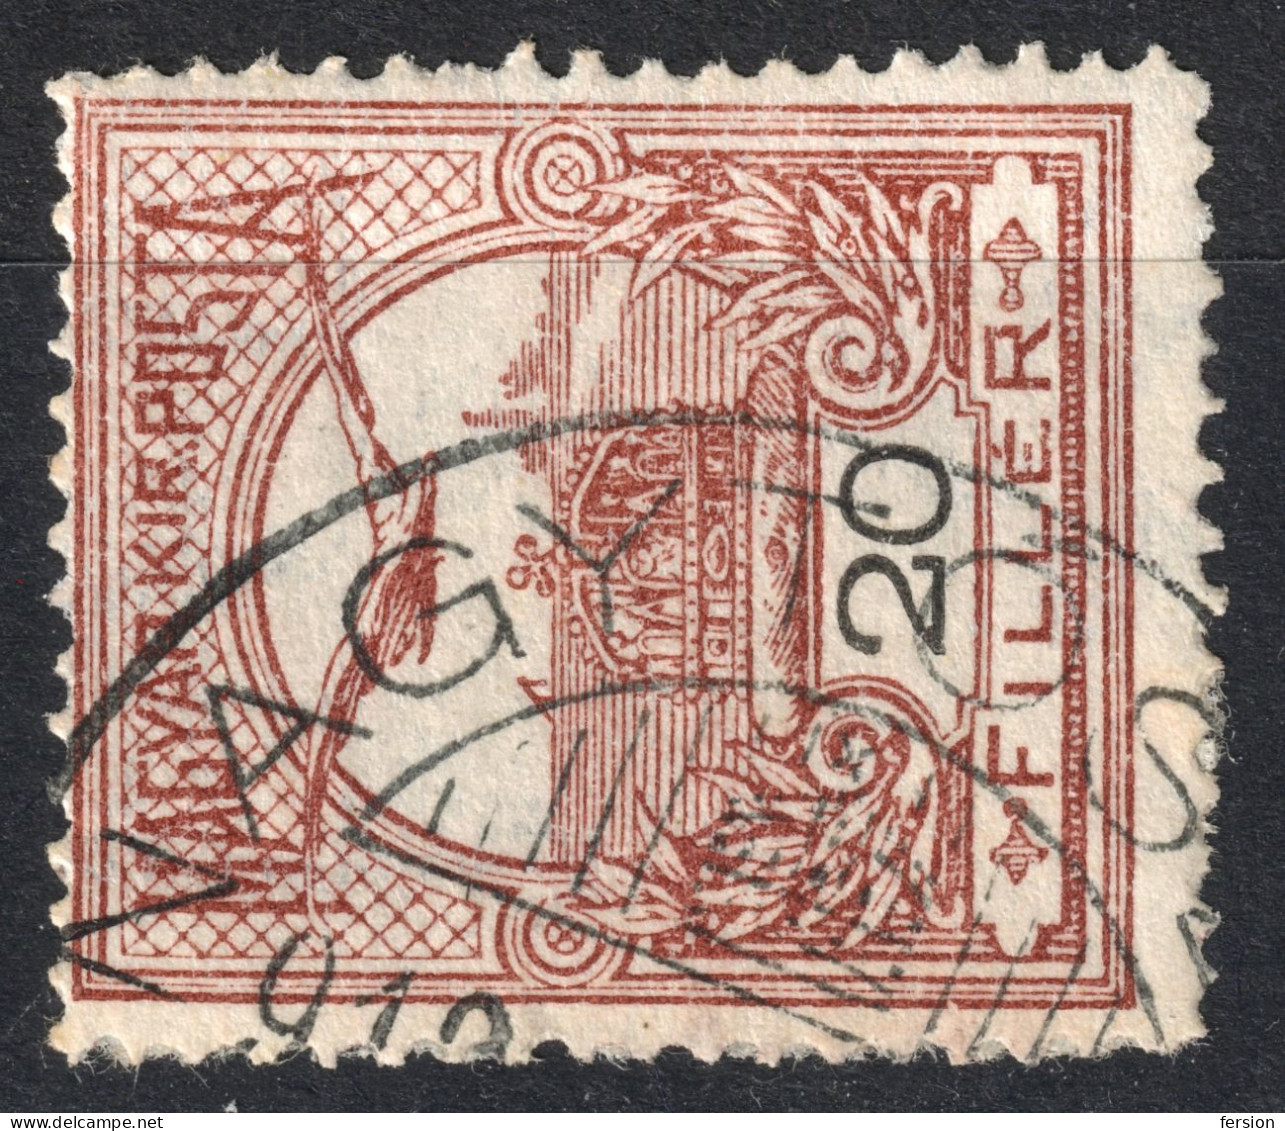 Tószeg Novi Kozarci Postmark TURUL Crown 1912 Hungary SERBIA Vojvodina Torontál BANAT County KuK - 20 Fill - Prefilatelia